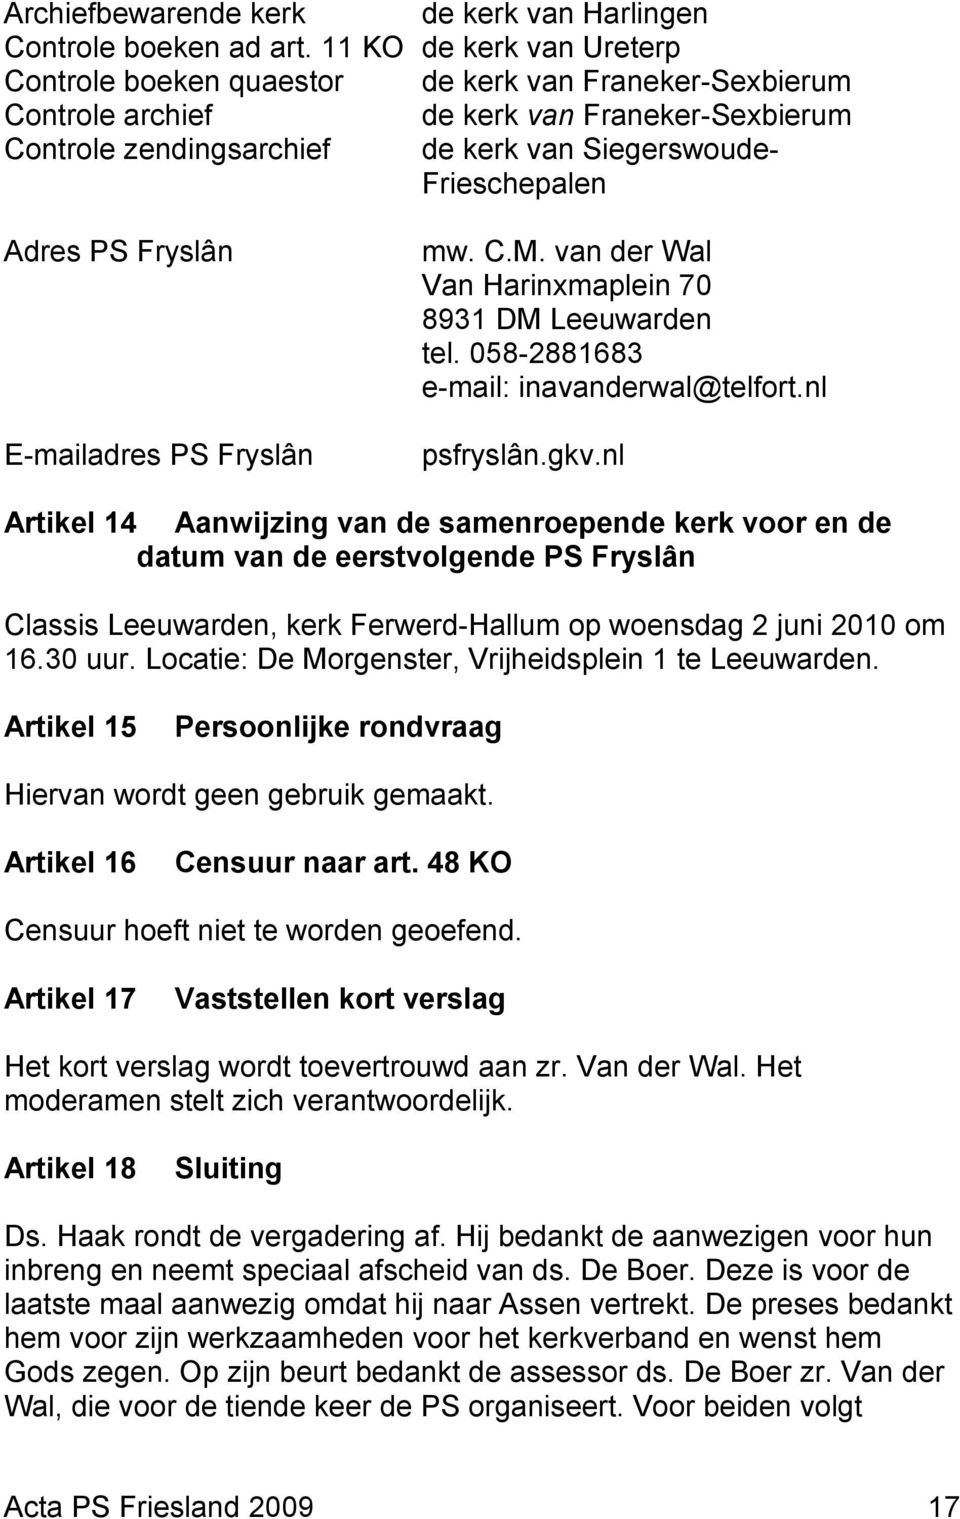 Adres PS Fryslân E-mailadres PS Fryslân mw. C.M. van der Wal Van Harinxmaplein 70 8931 DM Leeuwarden tel. 058-2881683 e-mail: inavanderwal@telfort.nl psfryslân.gkv.